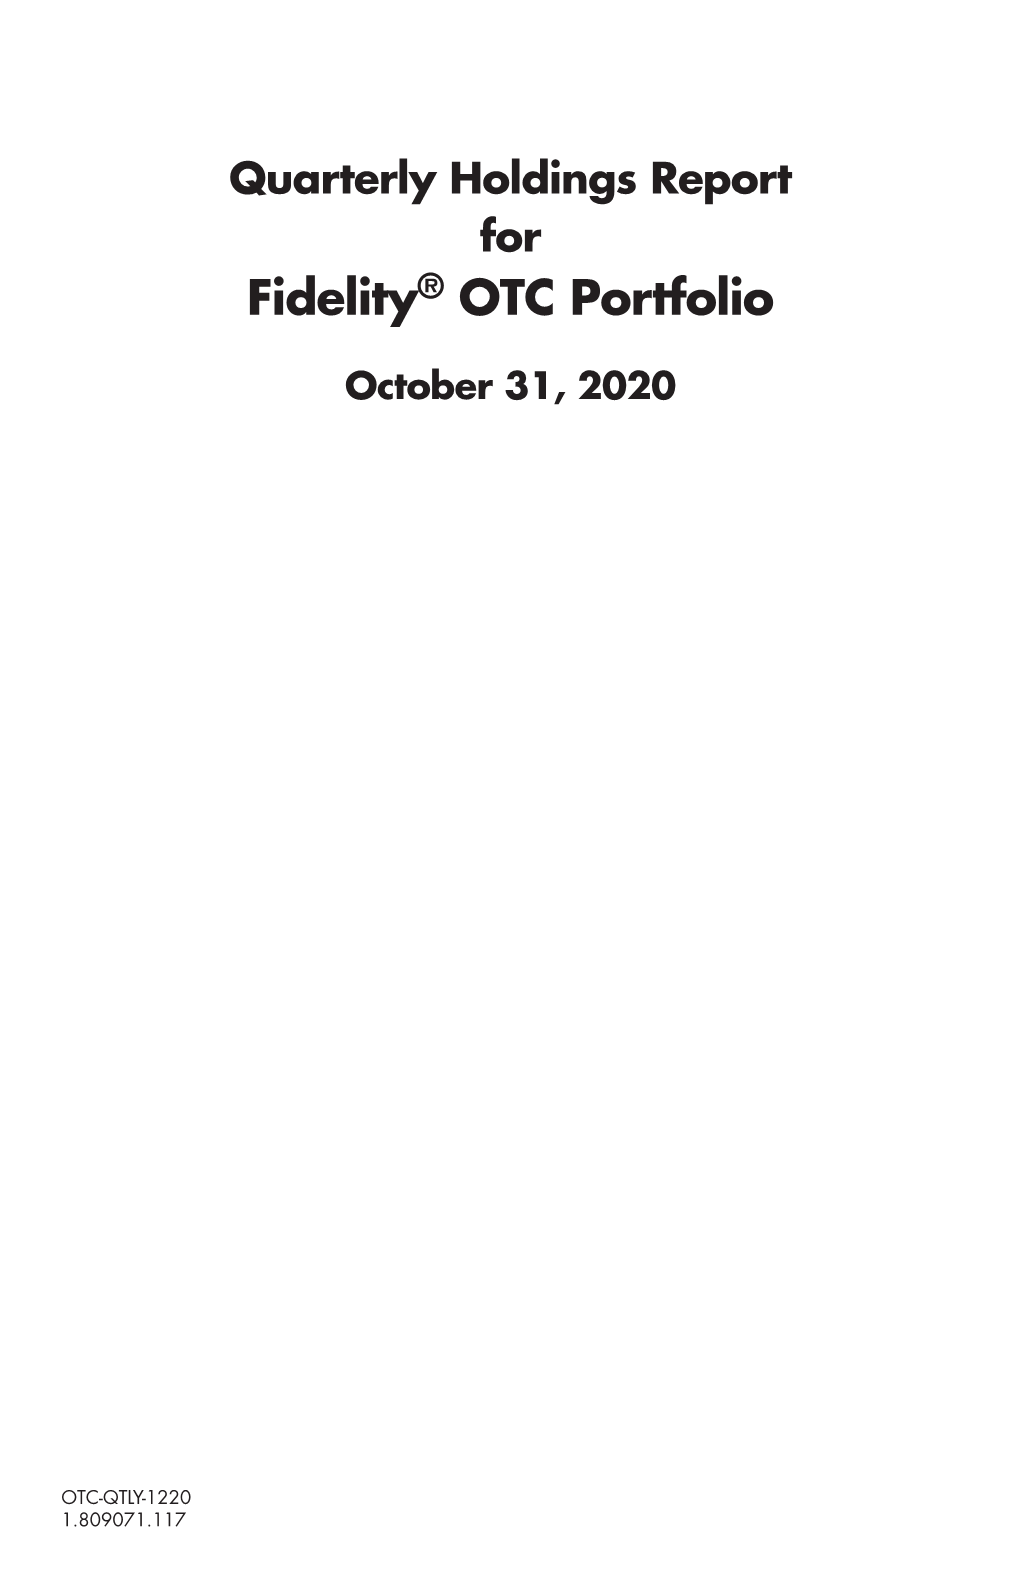 Fidelity® OTC Portfolio